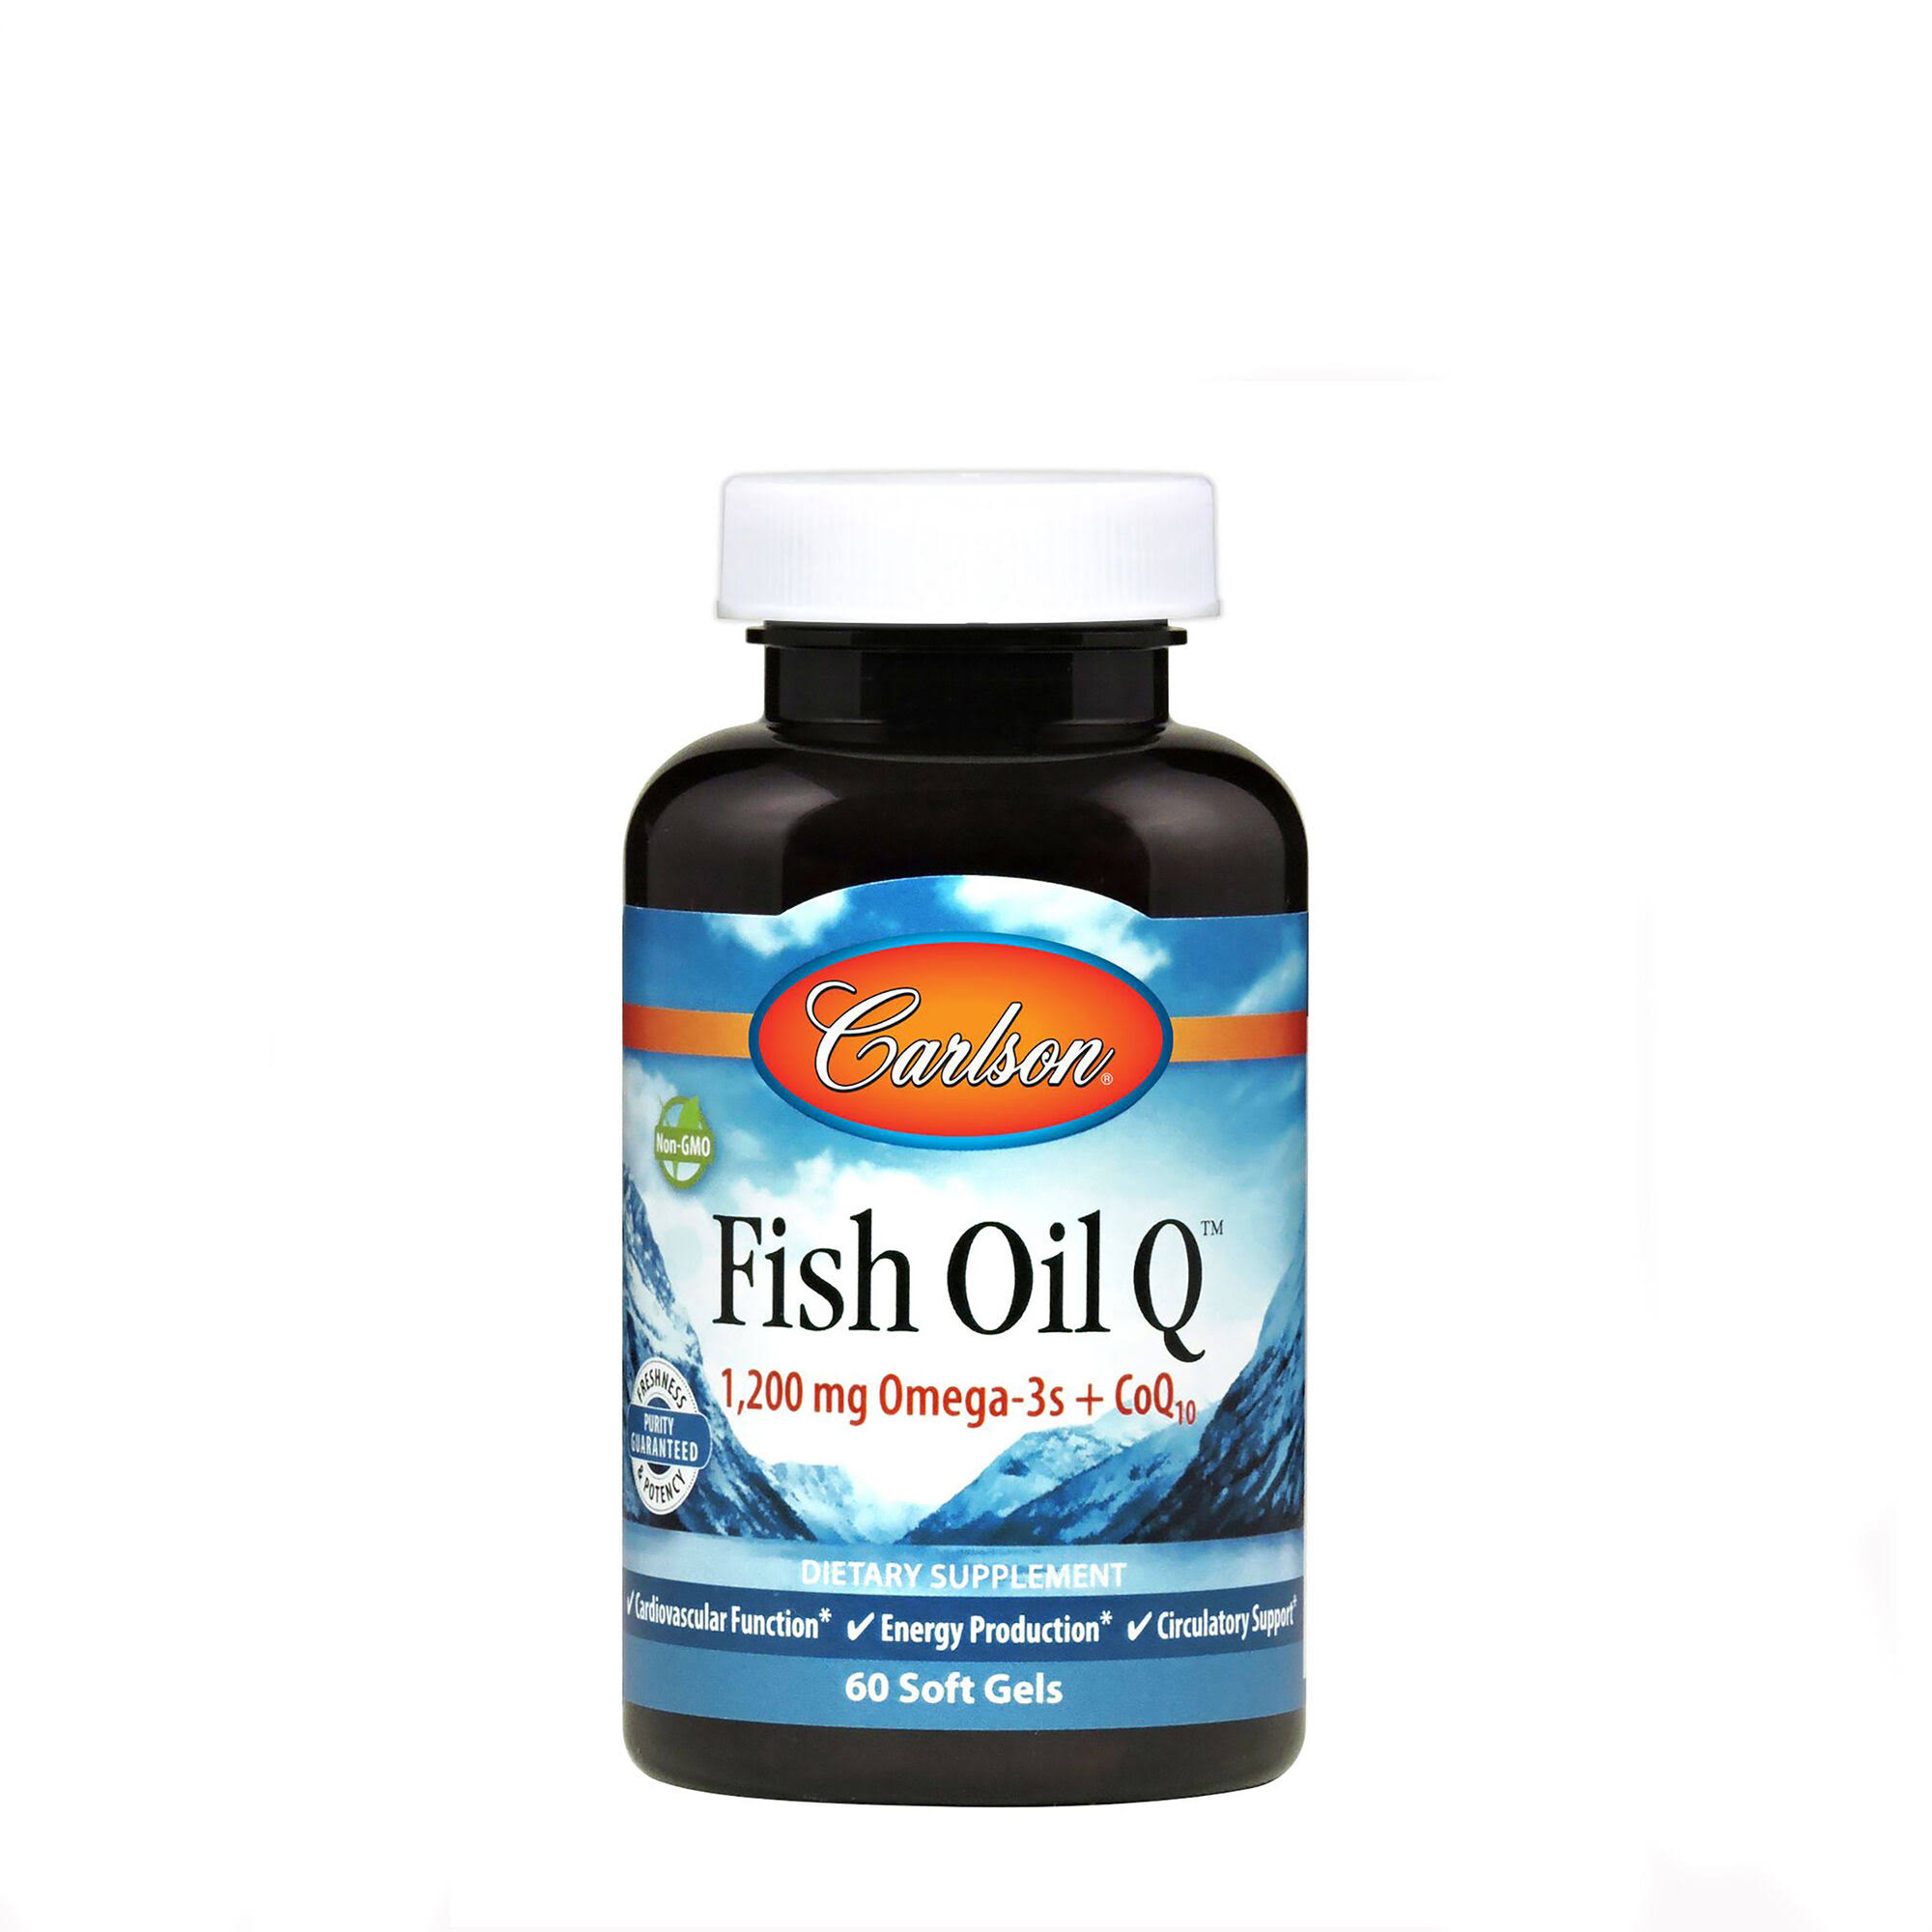 Carlson Labs Fish Oil Q Dietary Supplement - 60 Softgels